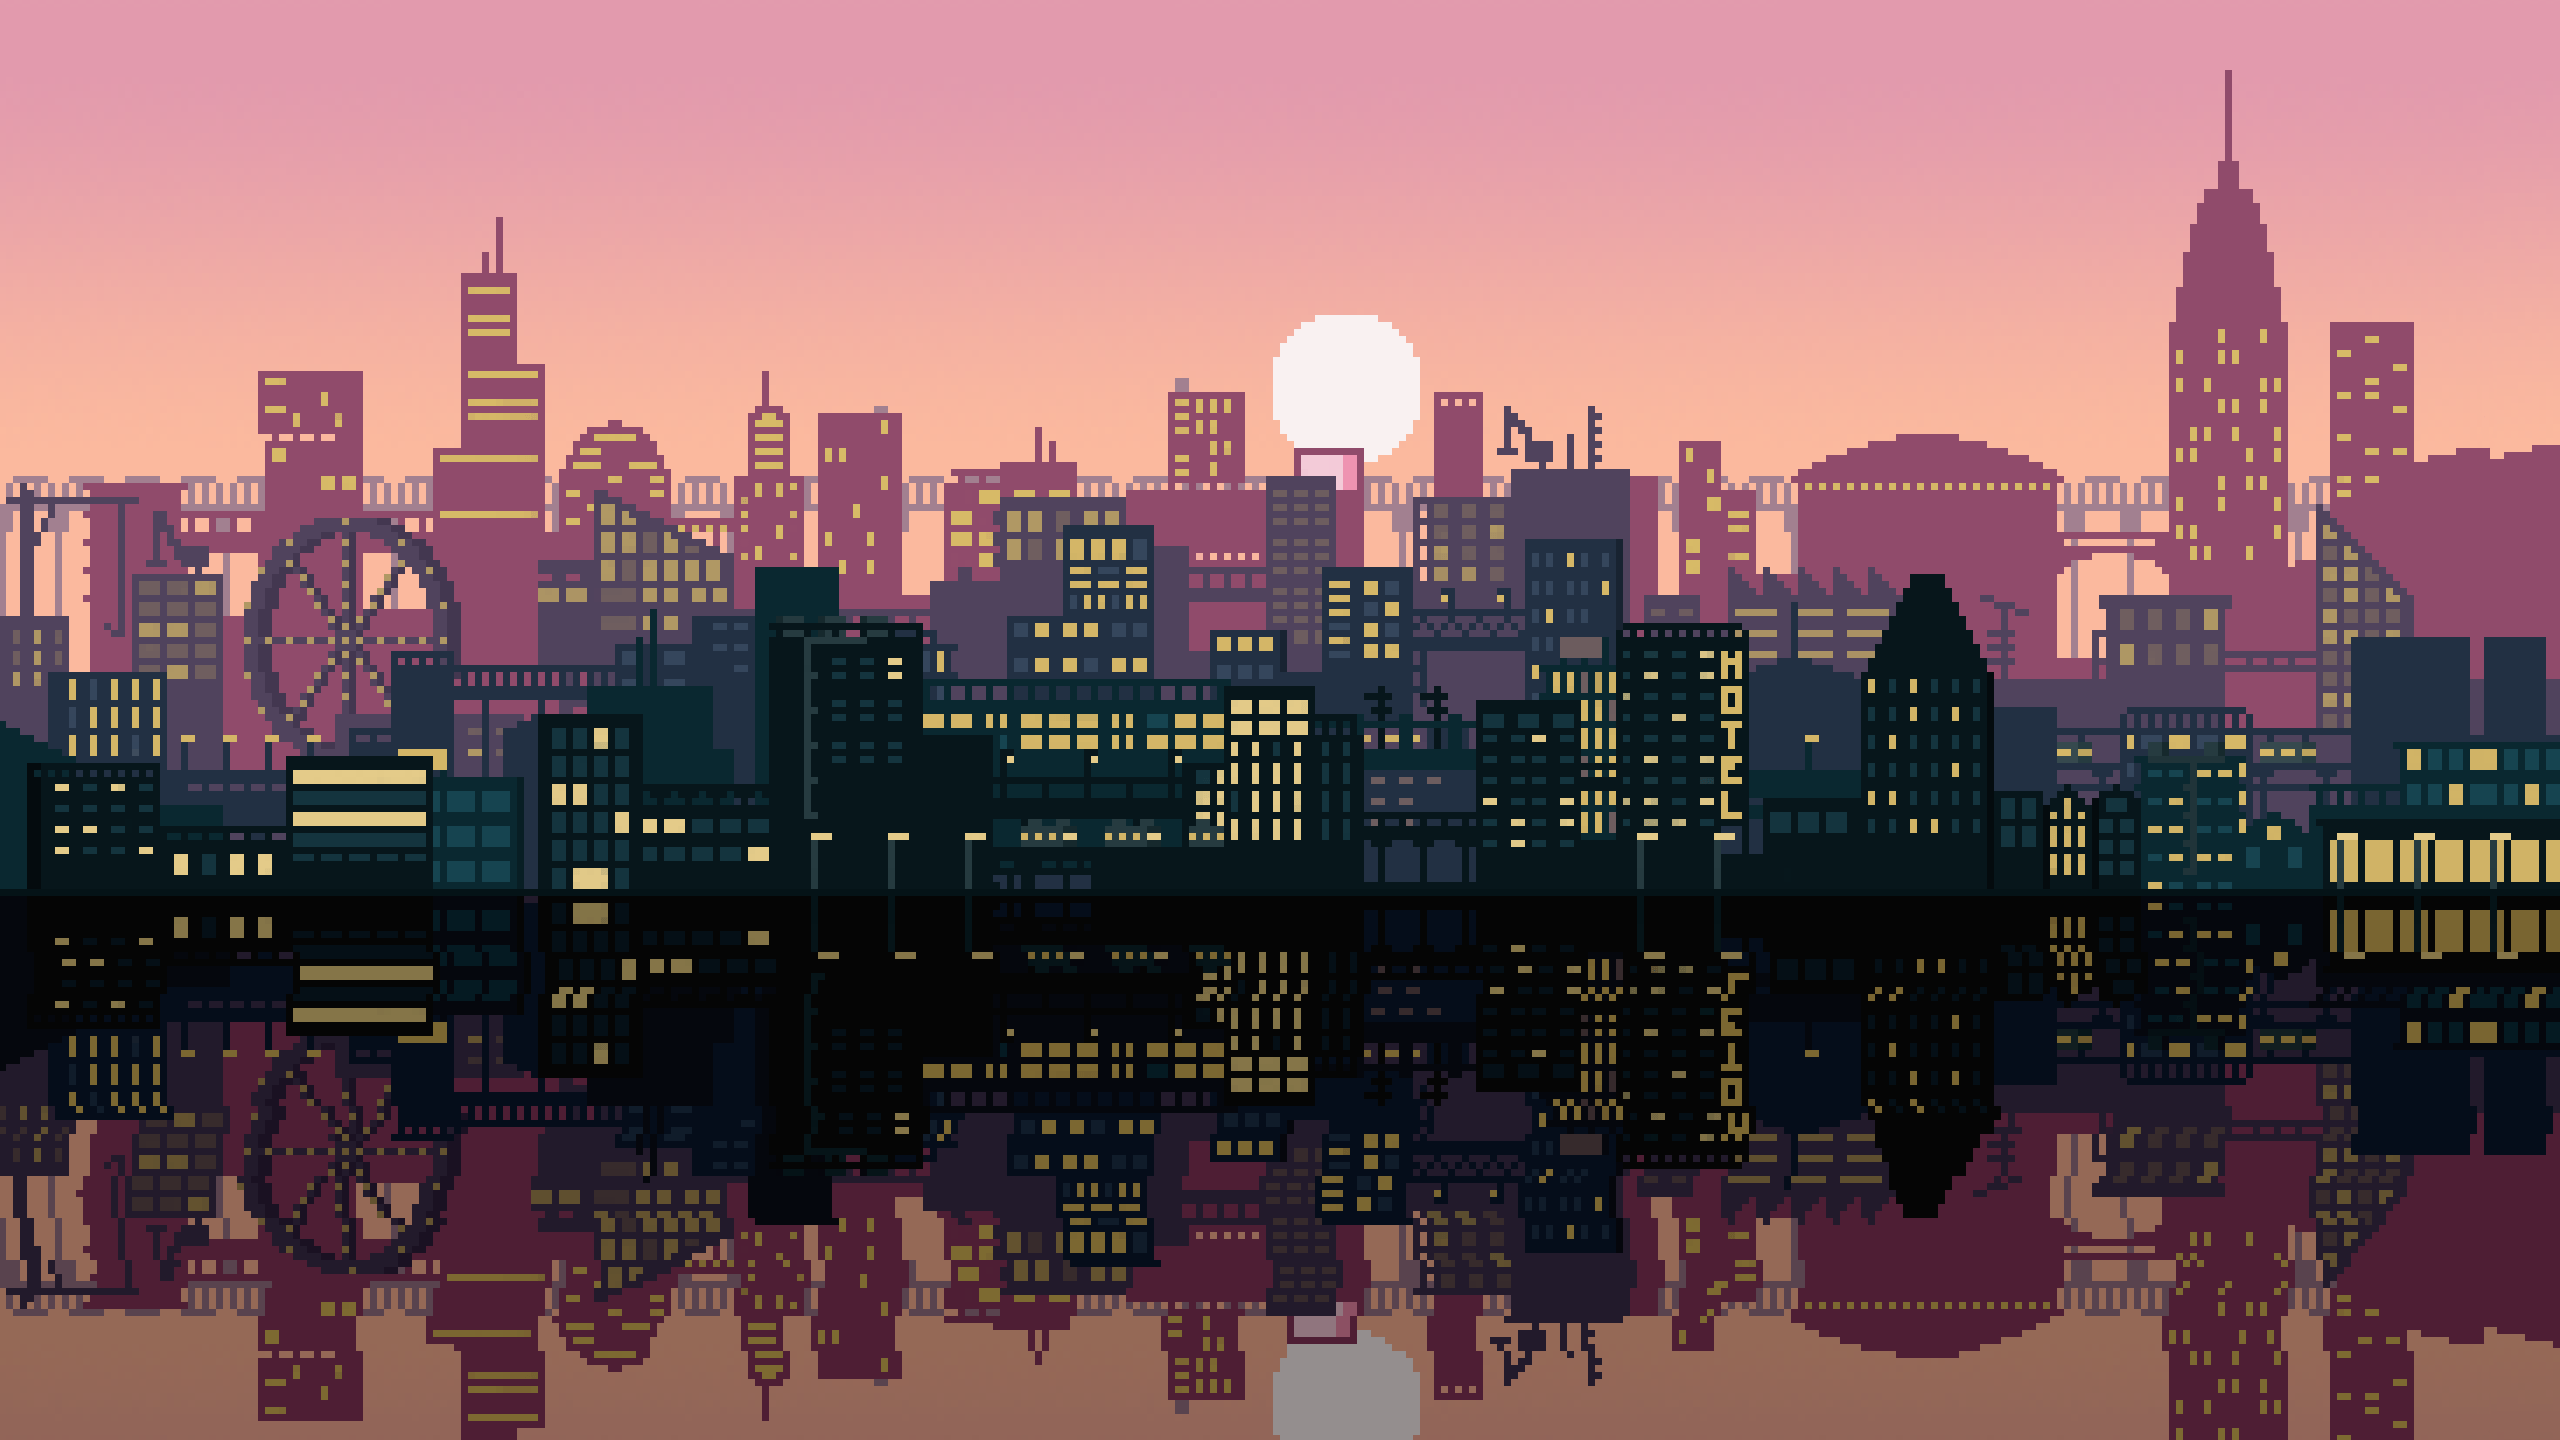 Pixel Art City [2560x1440][oc] - Pixel City Background - 2560x1440  Wallpaper 